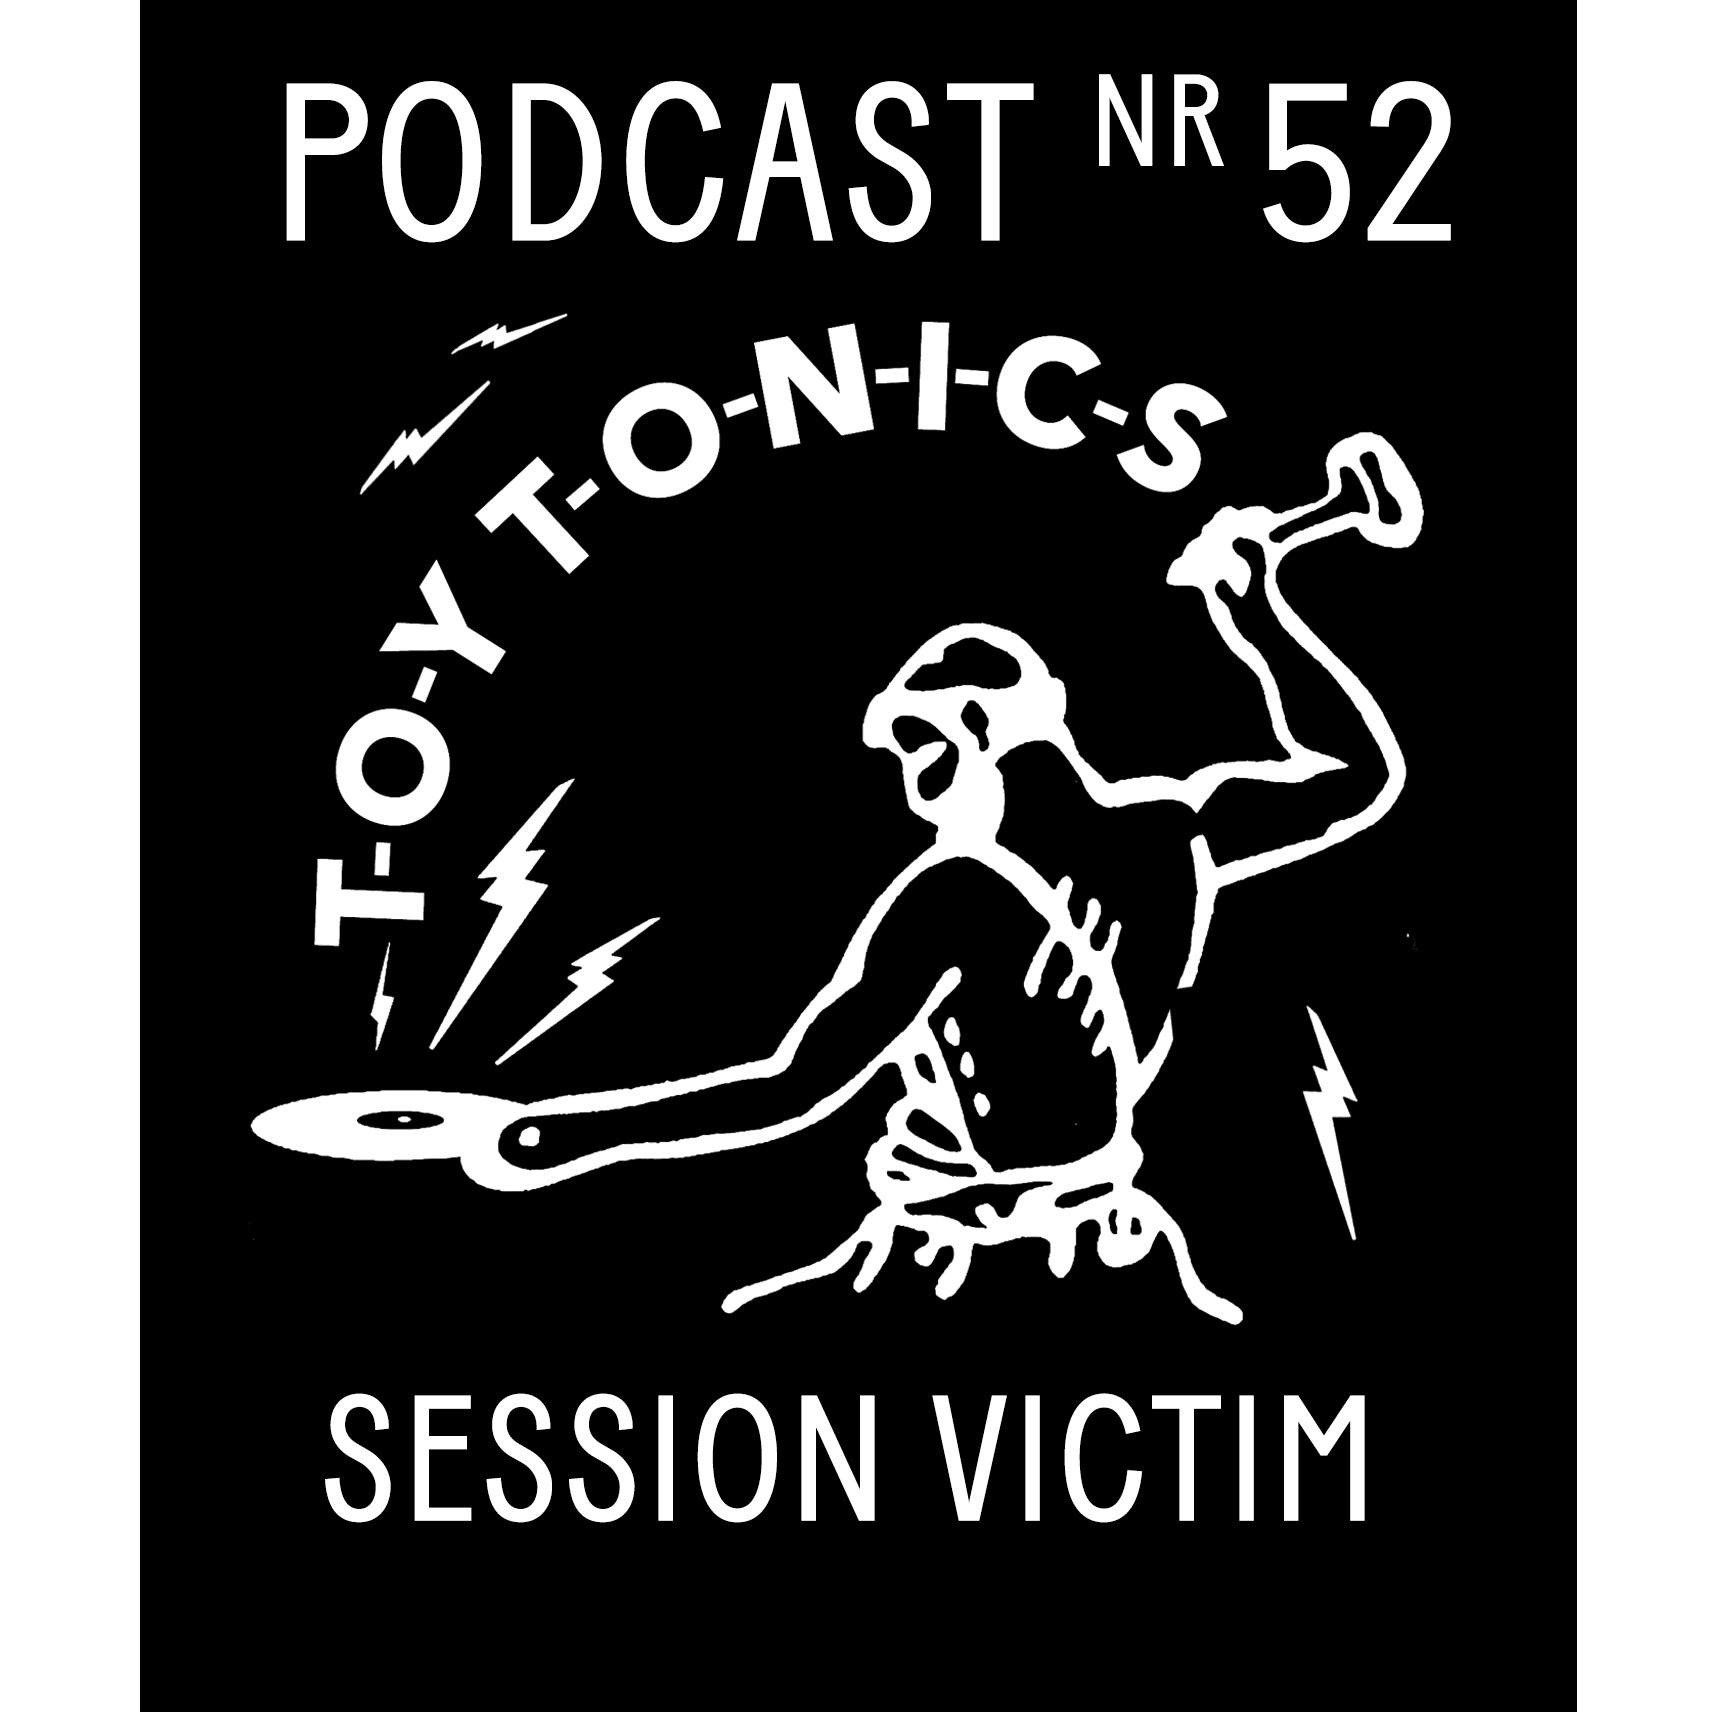 PODCAST NR 52 - Session Victim